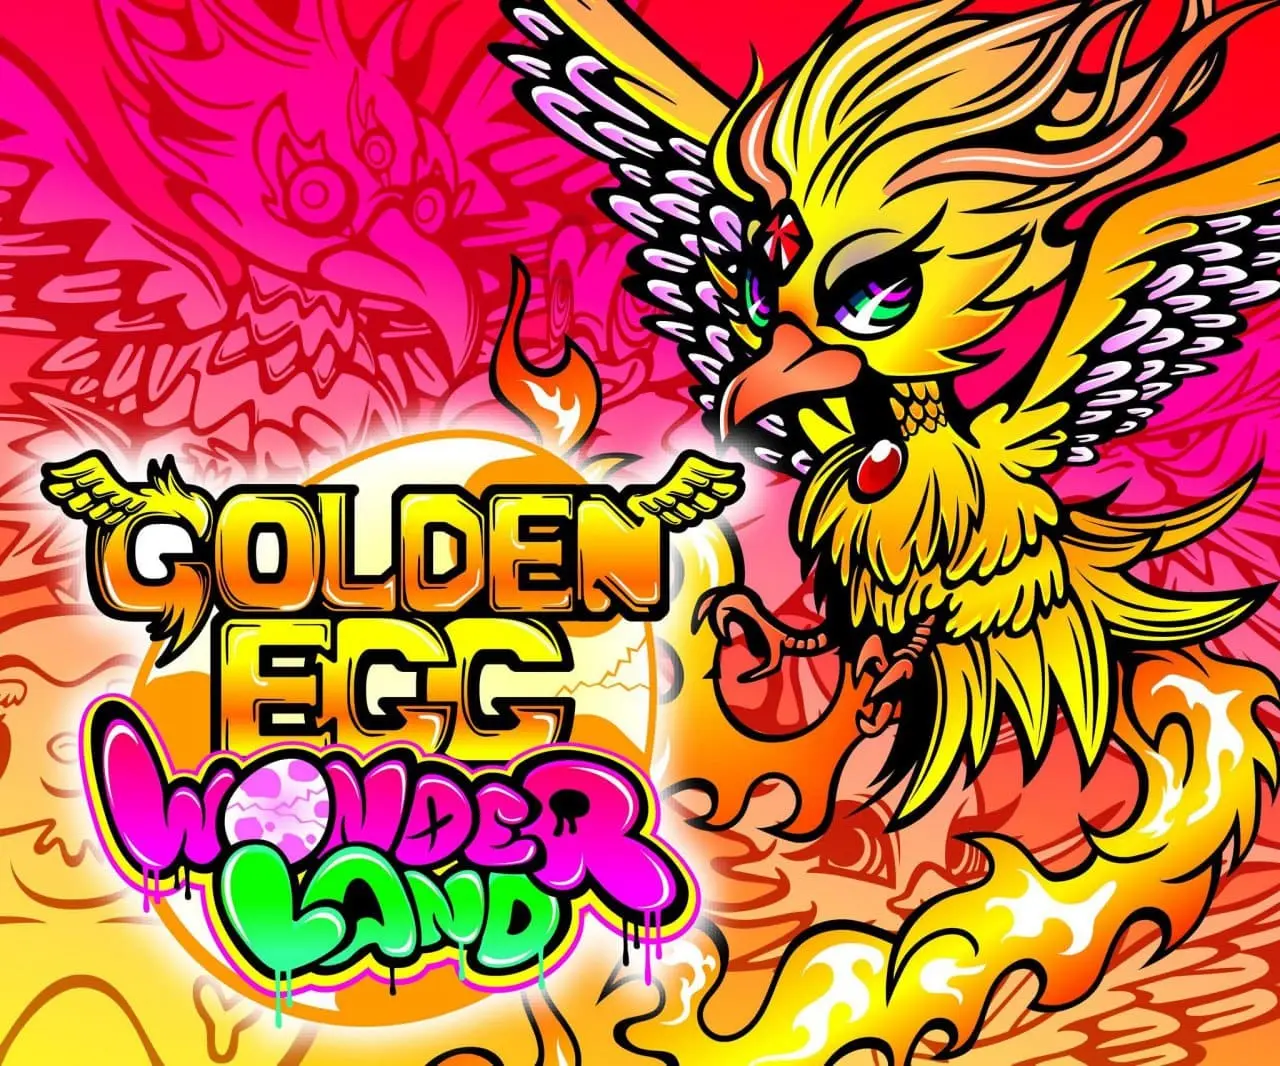 Play-to-Ern 혁명: Play-for-Gold: Golden Egg Wonderland에서 귀중한 NFT 수집